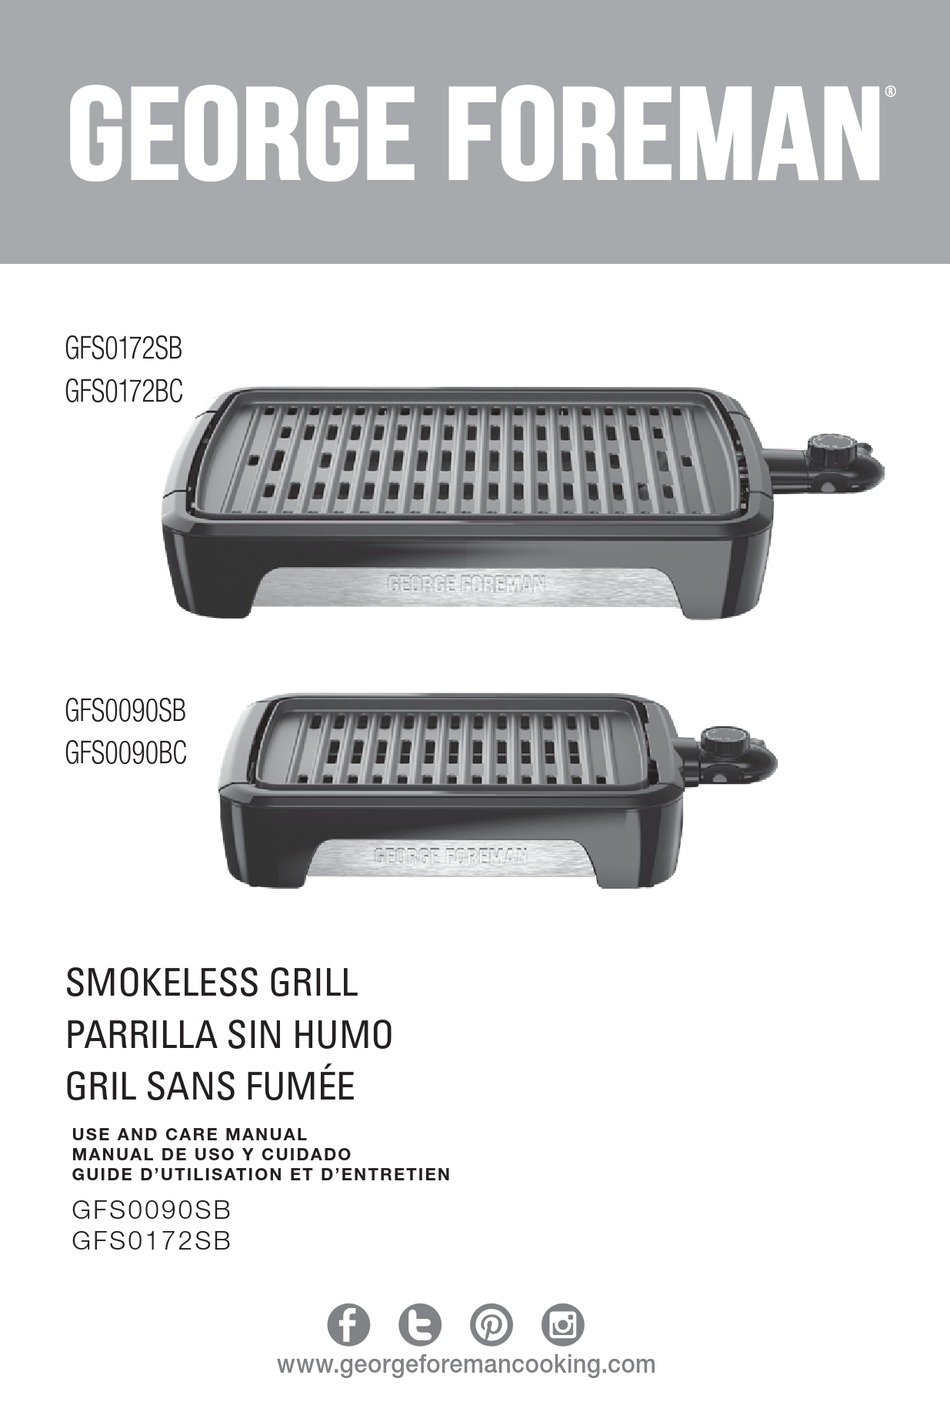 George Foreman GFSG01 Smokeless Grill